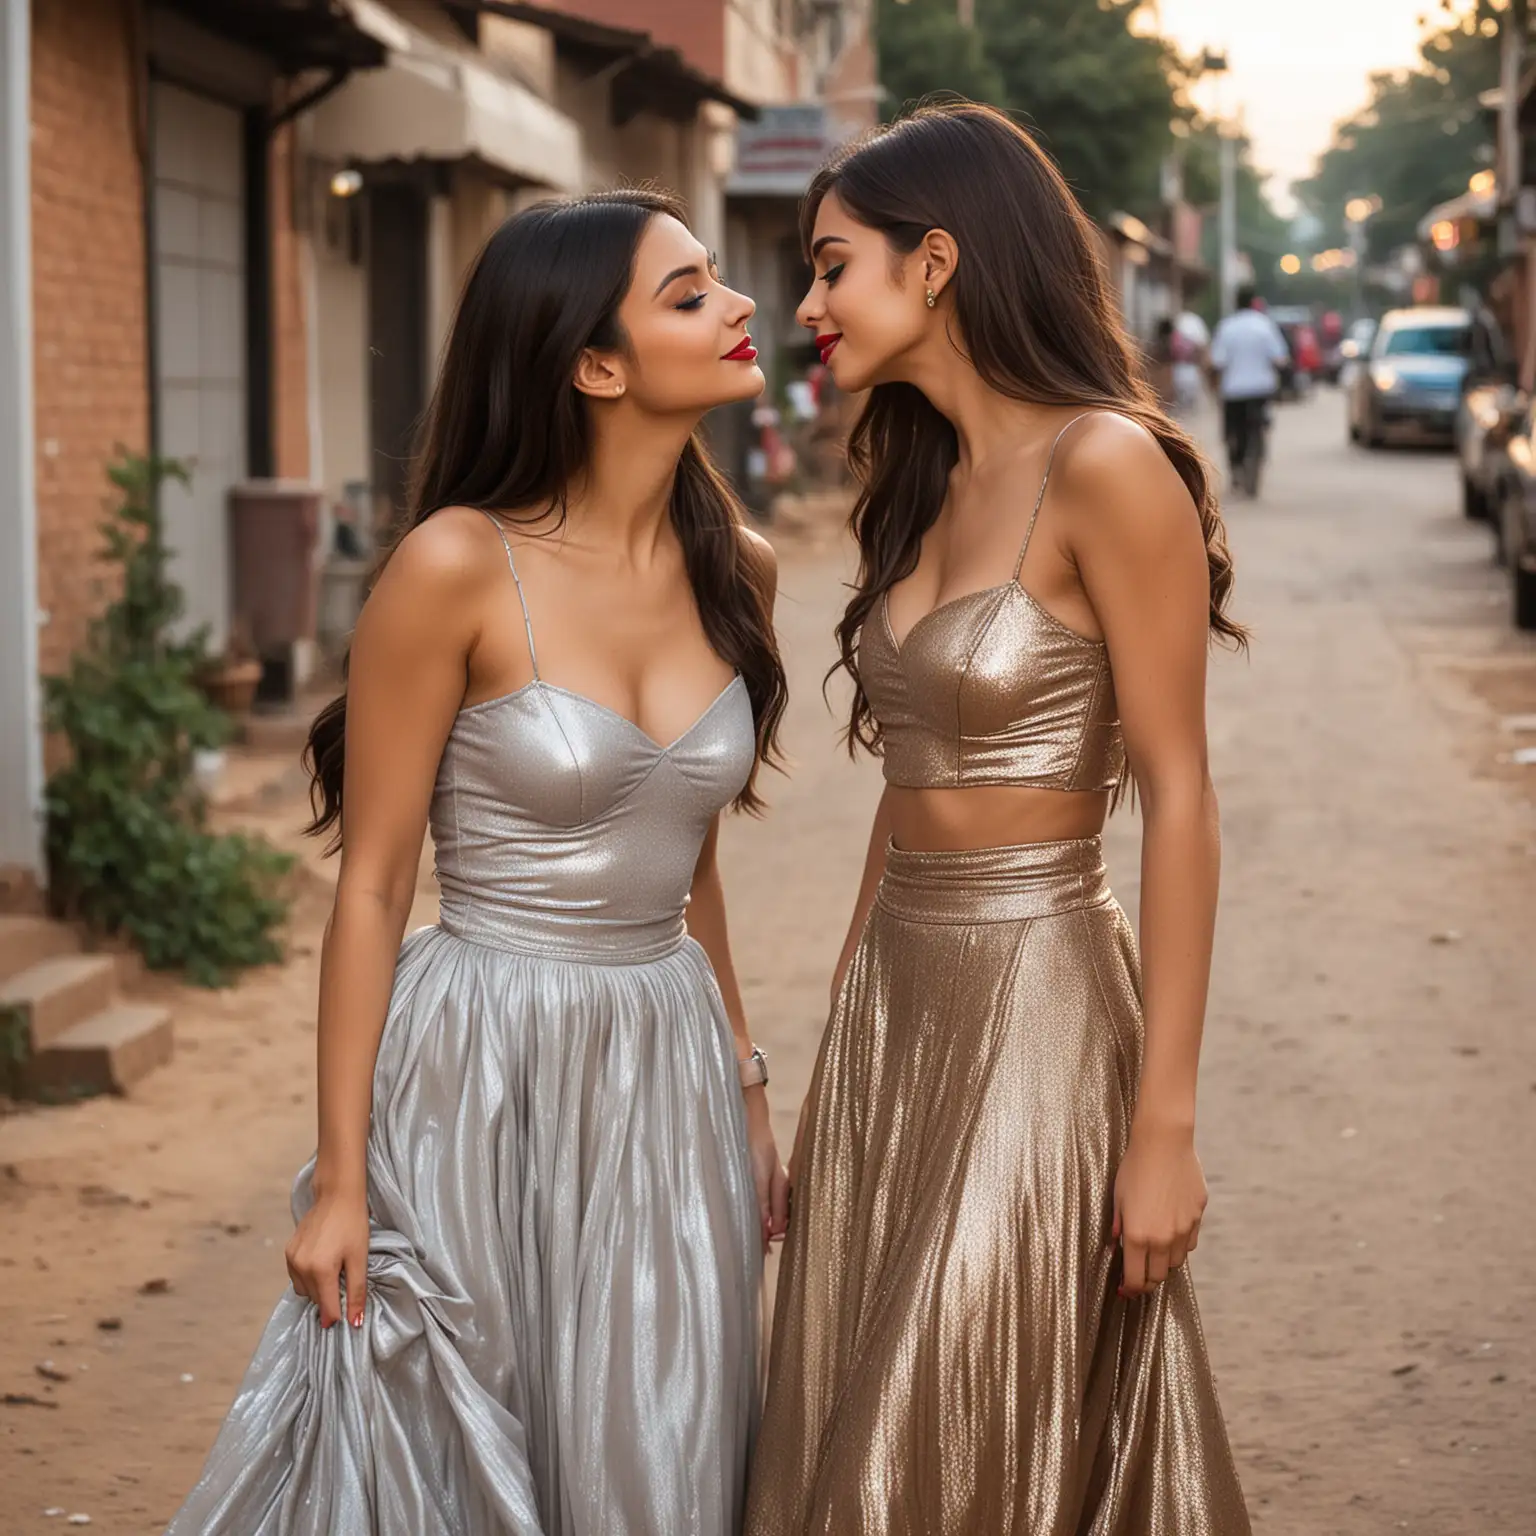 Celebrity Trio Kisses in Shiny Metallic Skirts on Vibrant Village Street